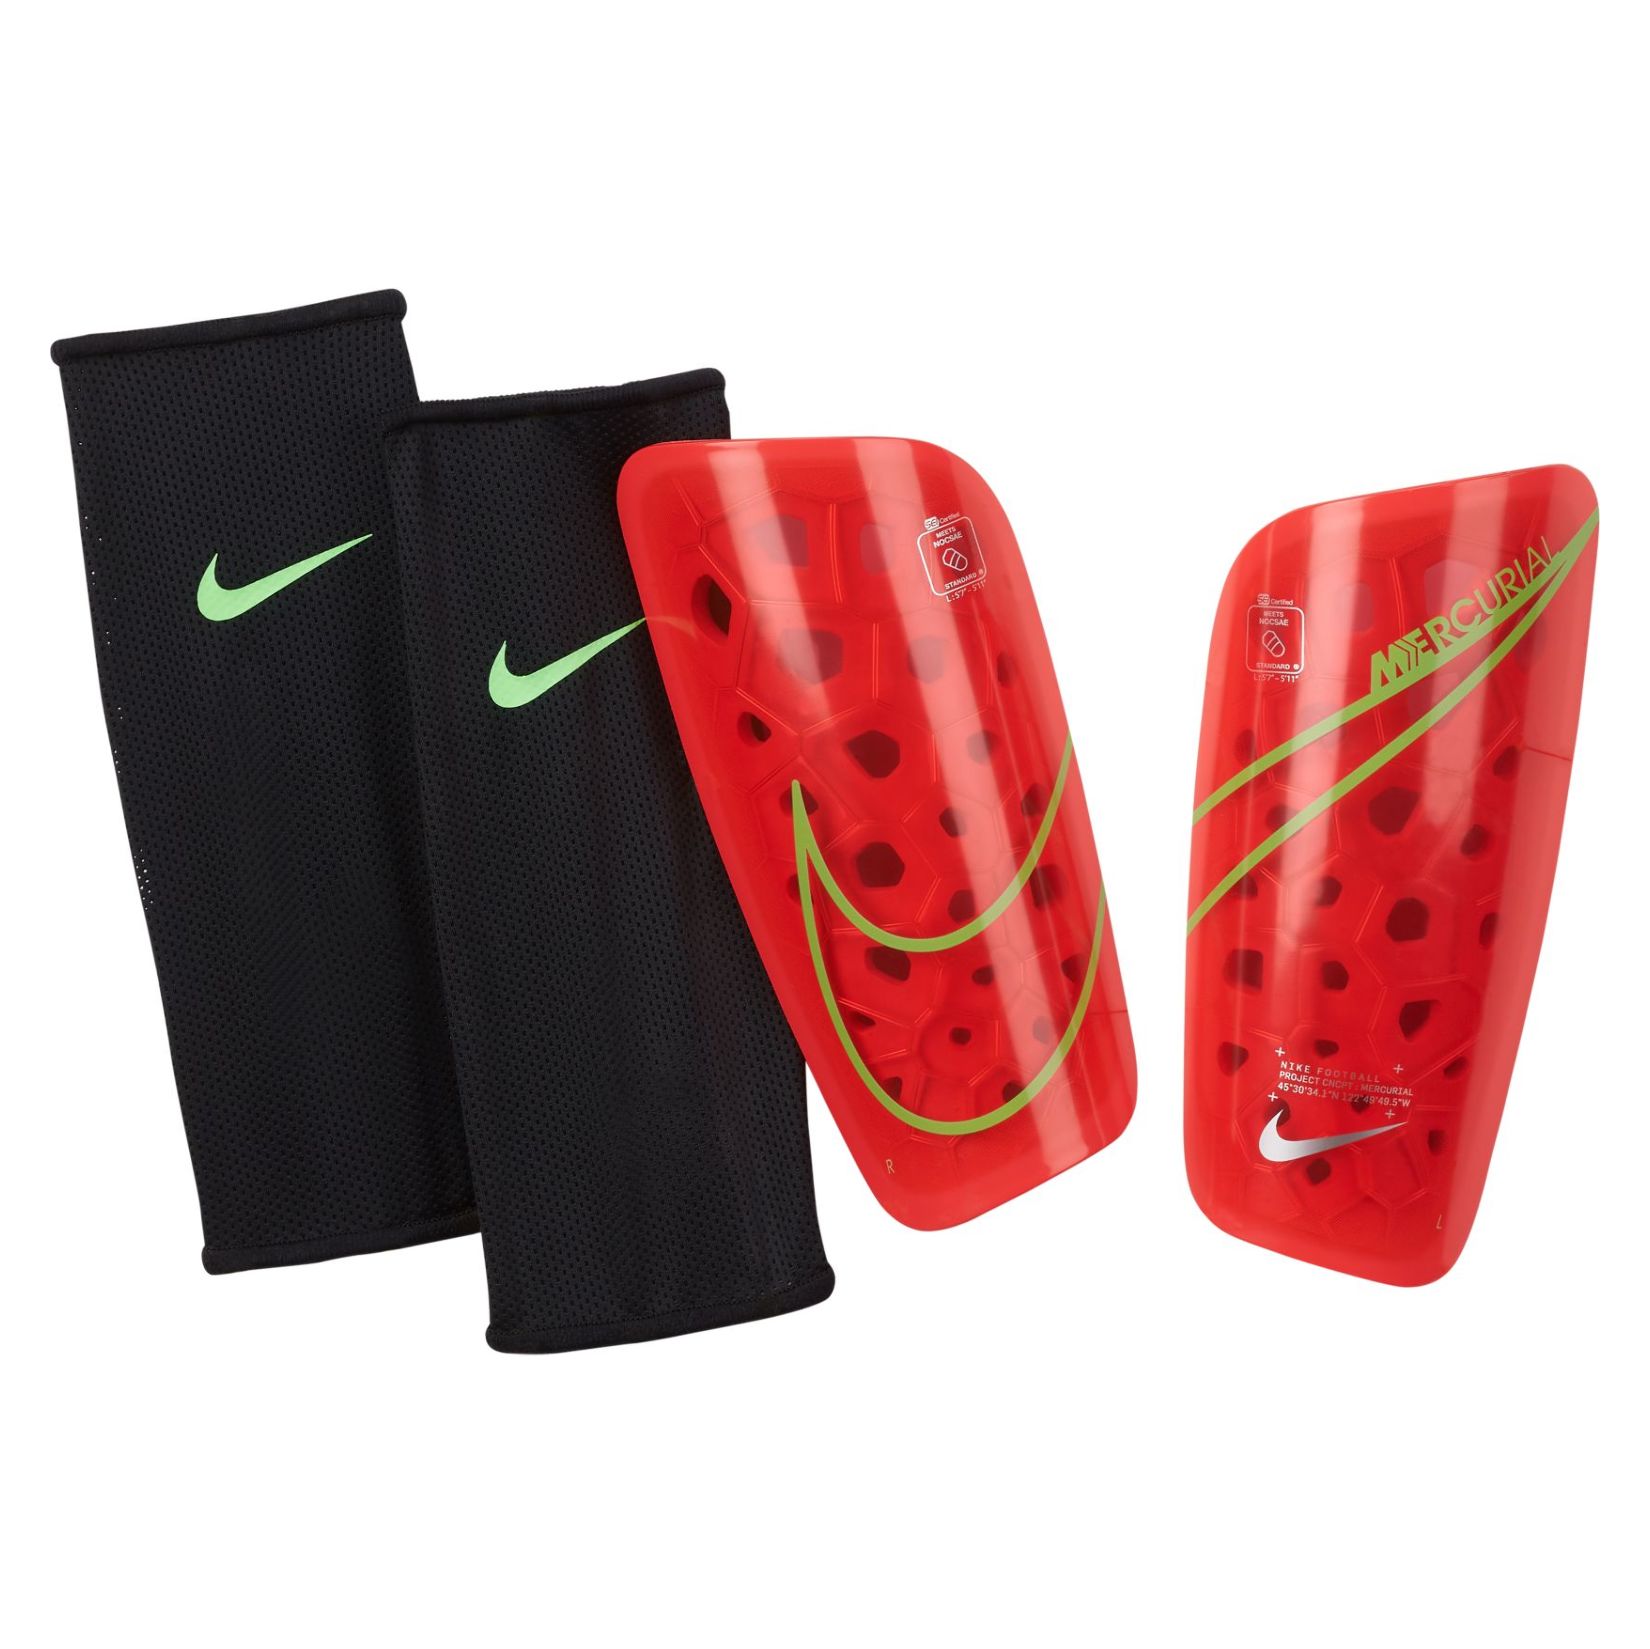 Nike Mercurial Lite Football Shin Guards